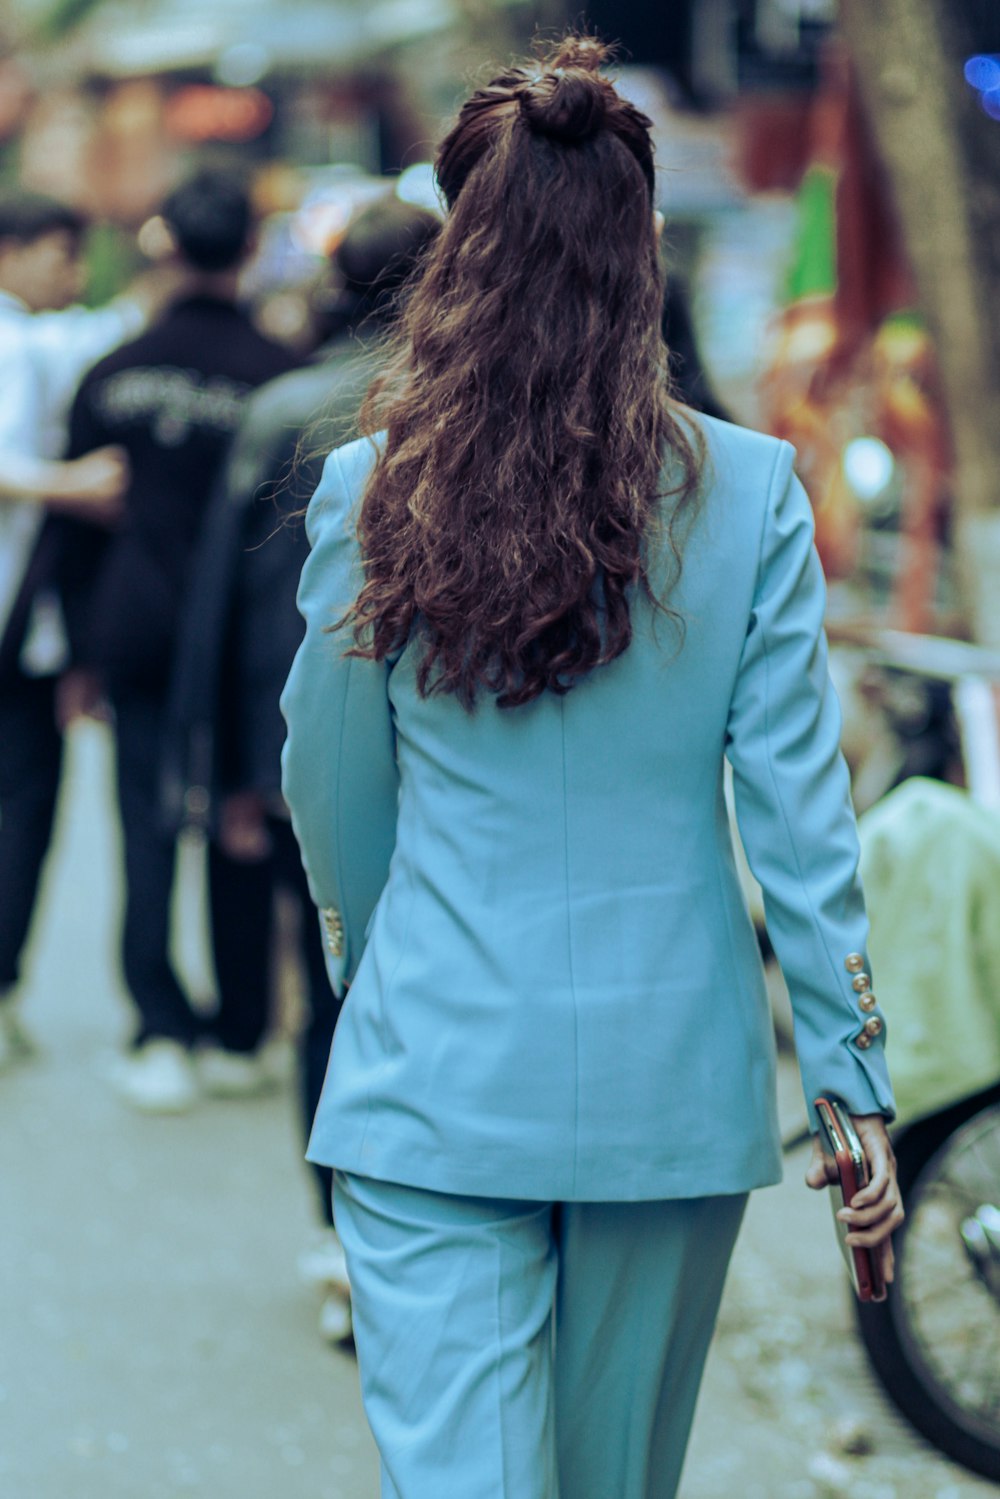 a woman in a blue suit walking down a street